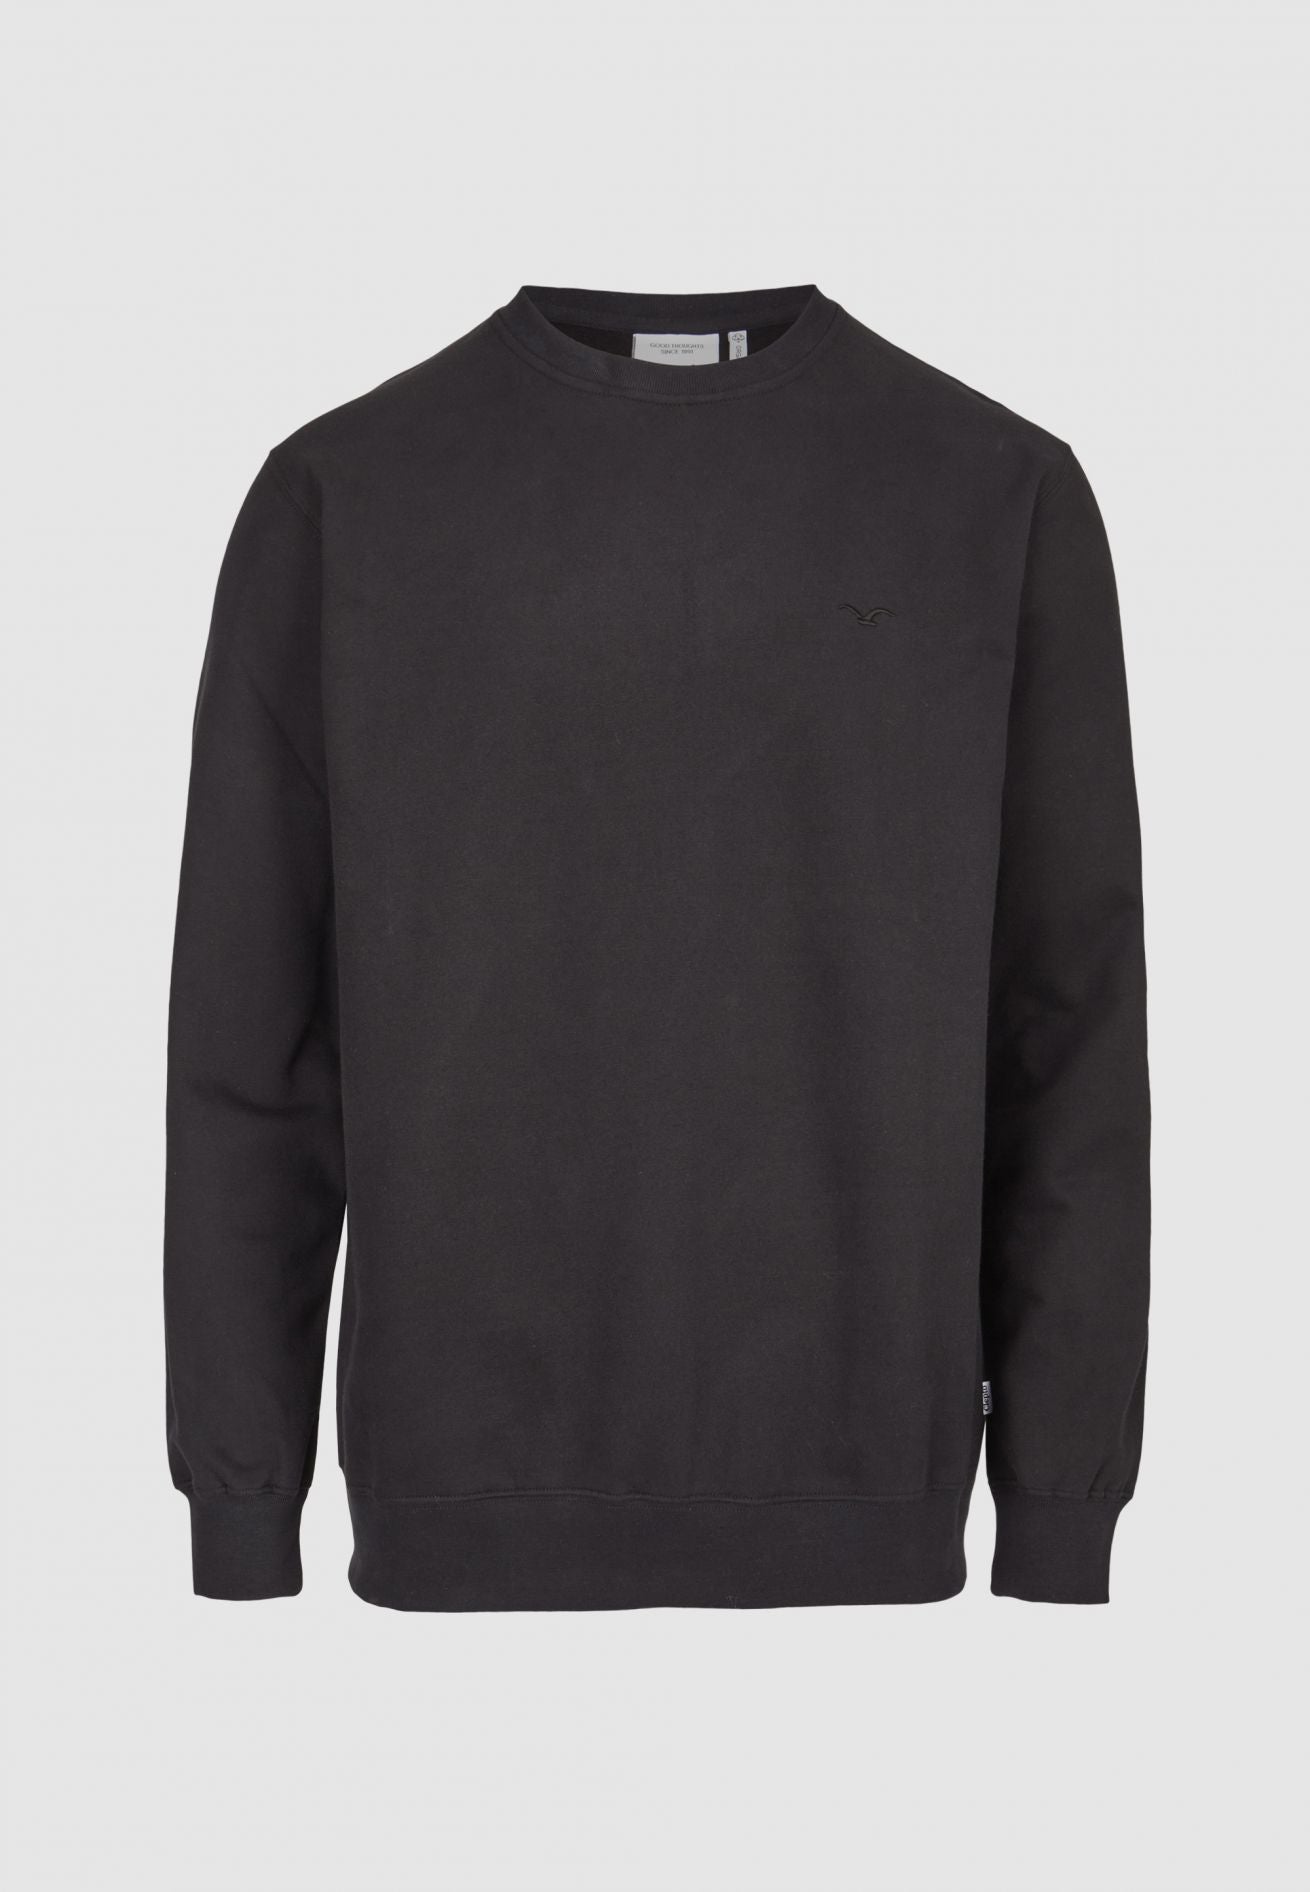 Cleptomanicx Ligull Crewneck Sweatshirt - Black